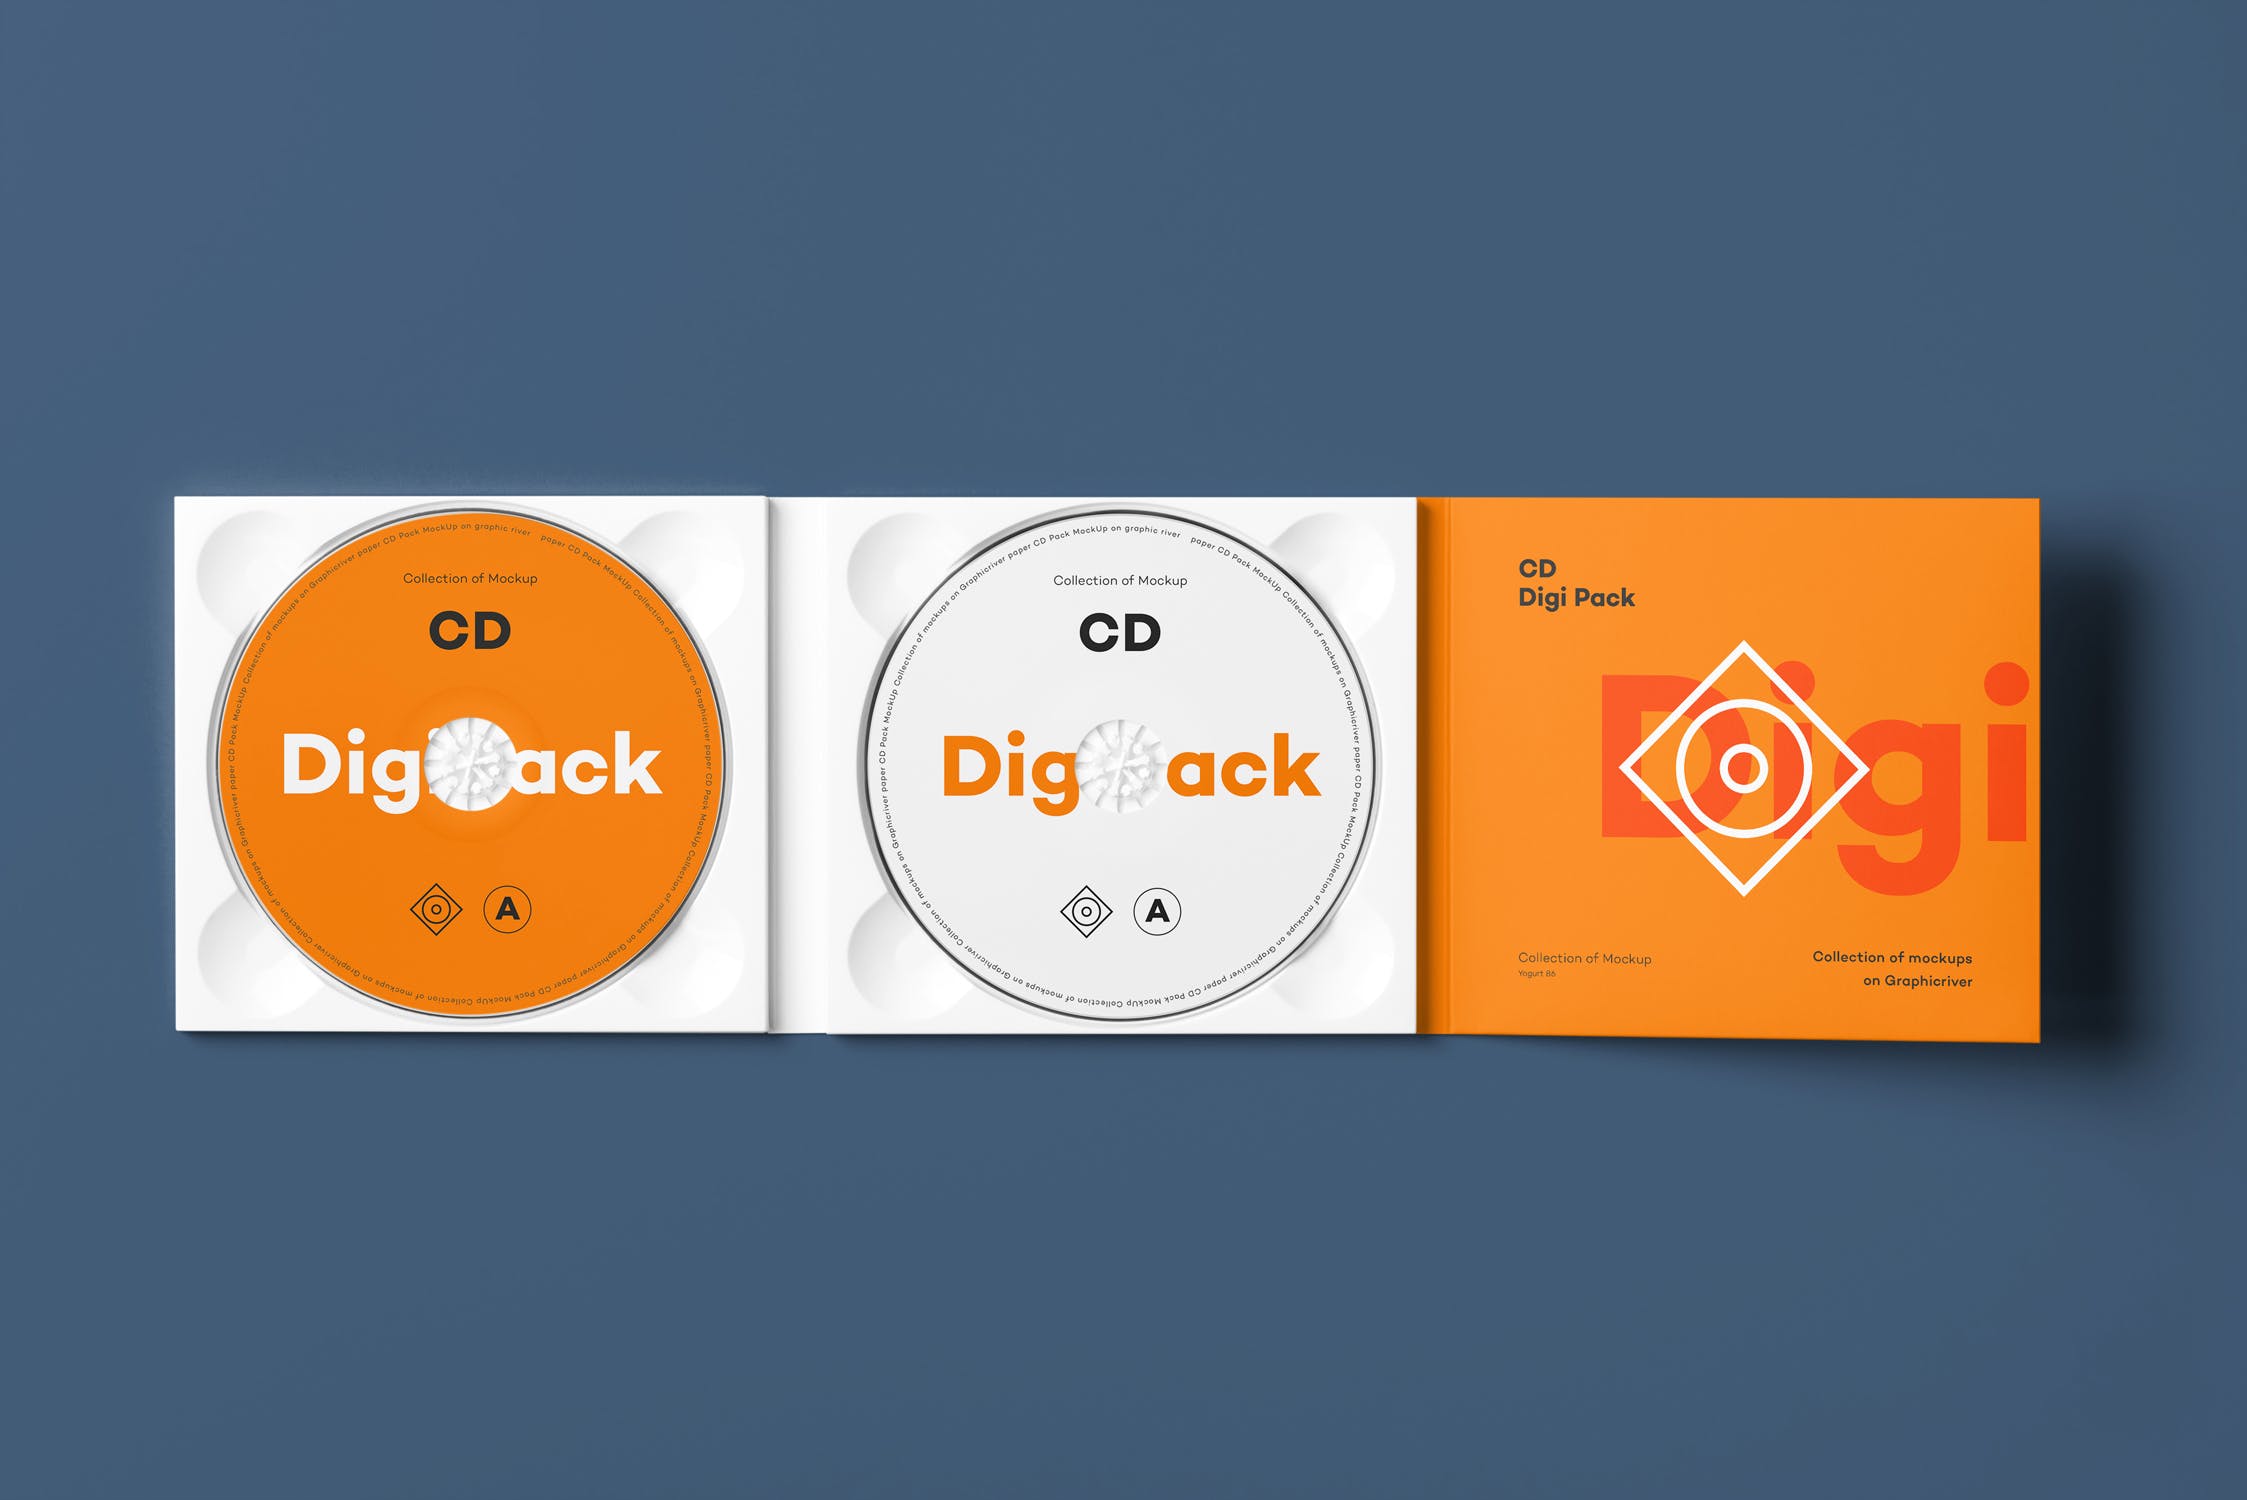 CD光碟封面&包装盒设计图非凡图库精选模板v8 CD Digi Pack Mock-up 8插图(7)